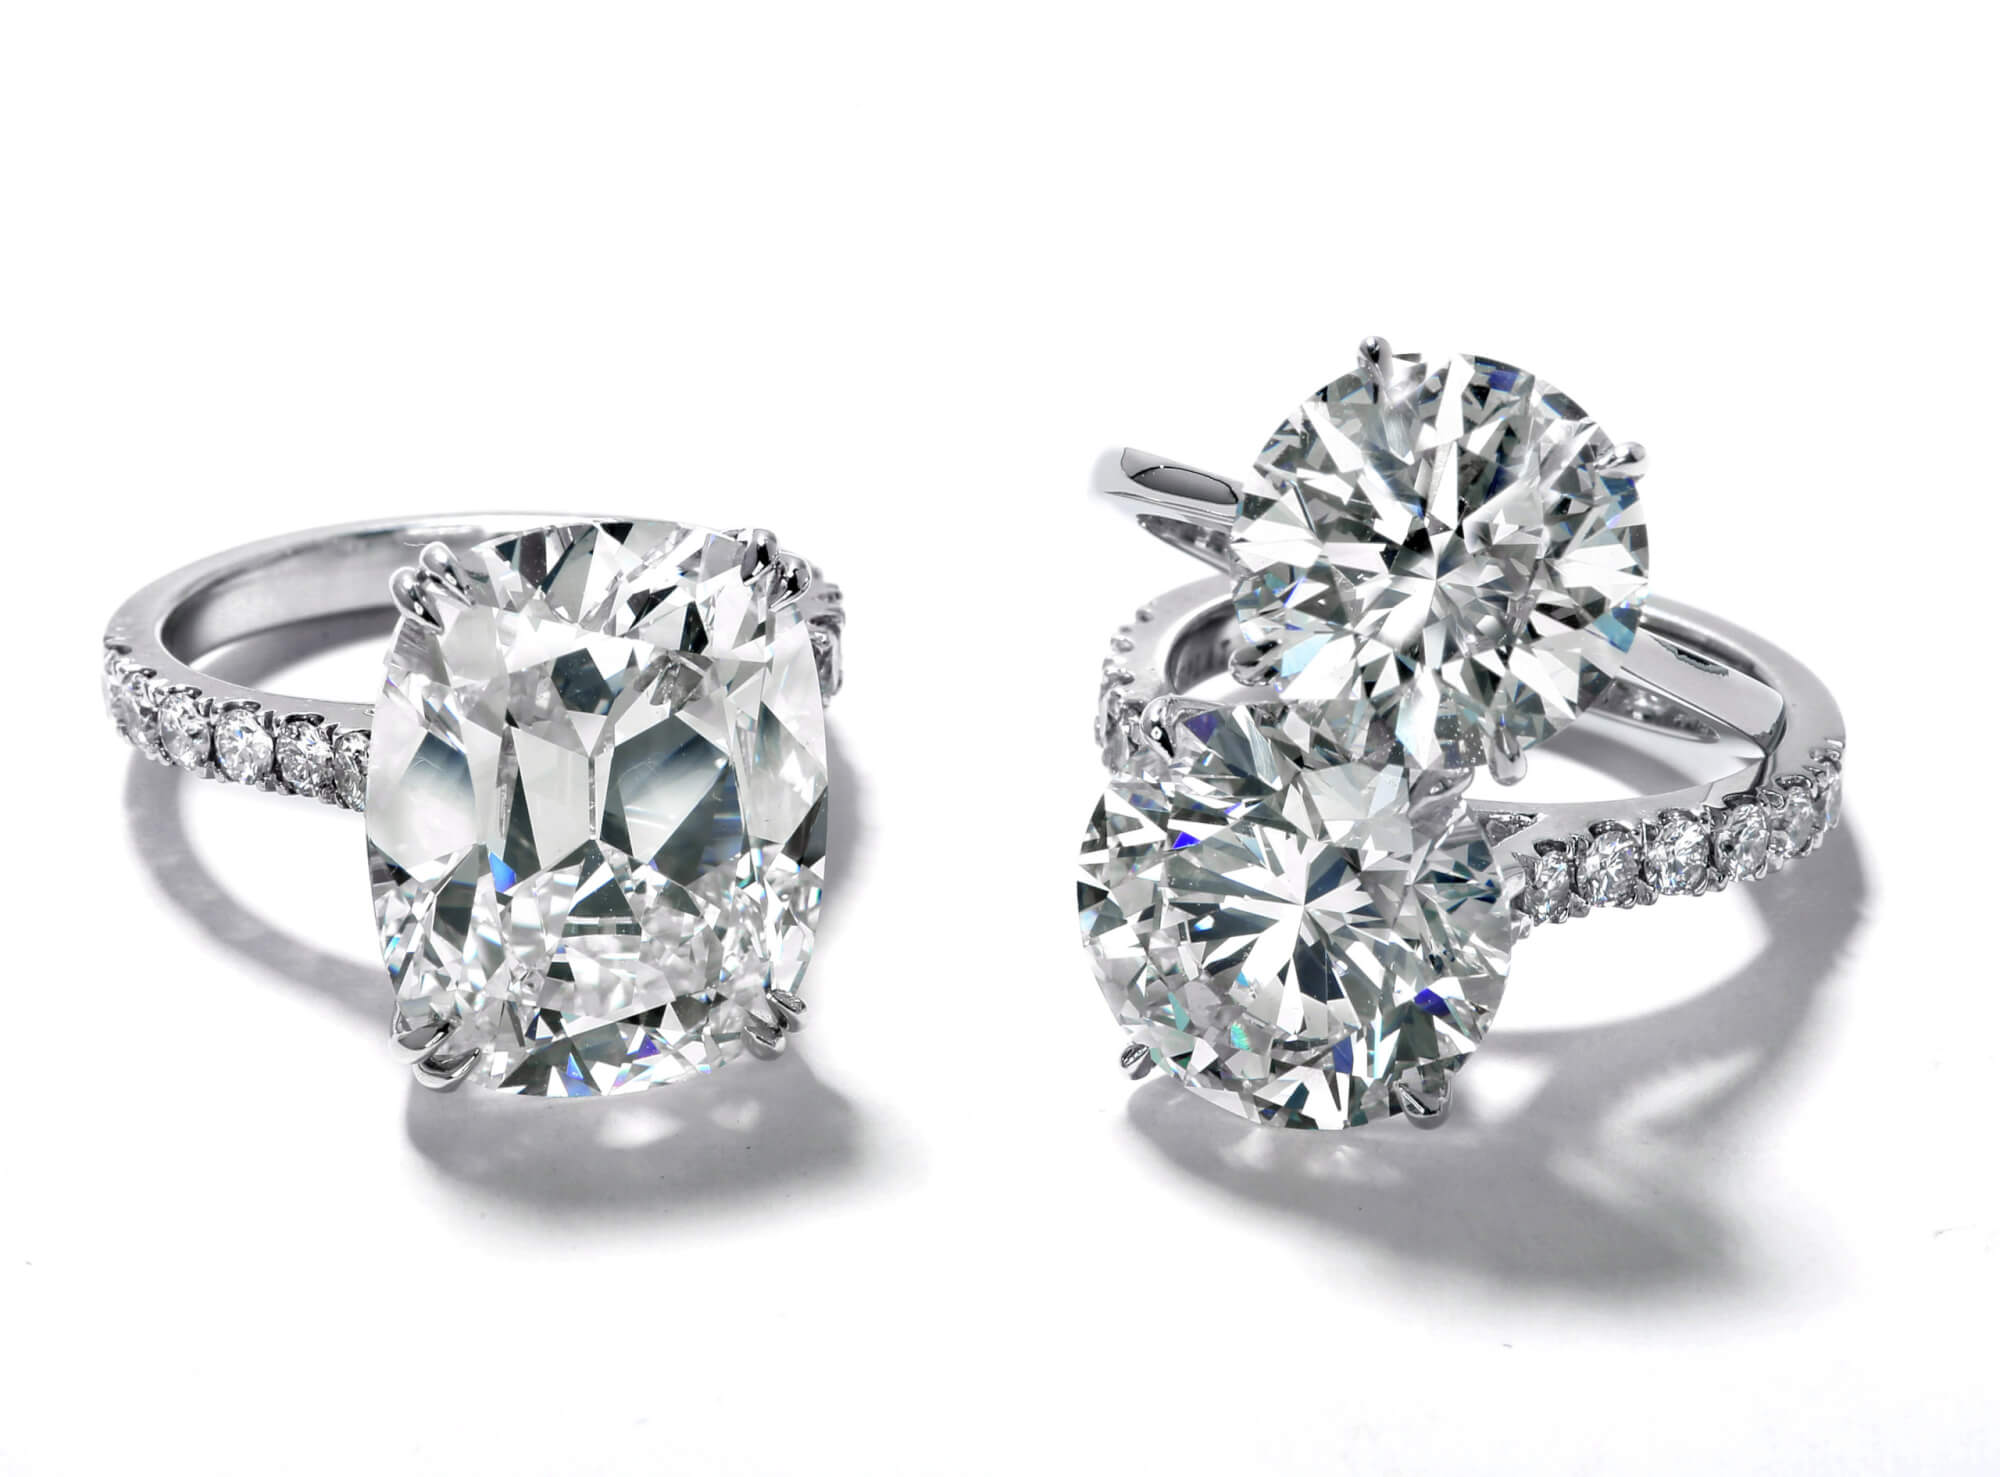 Restored Diamond Gemstone Rings by Master Jewelers